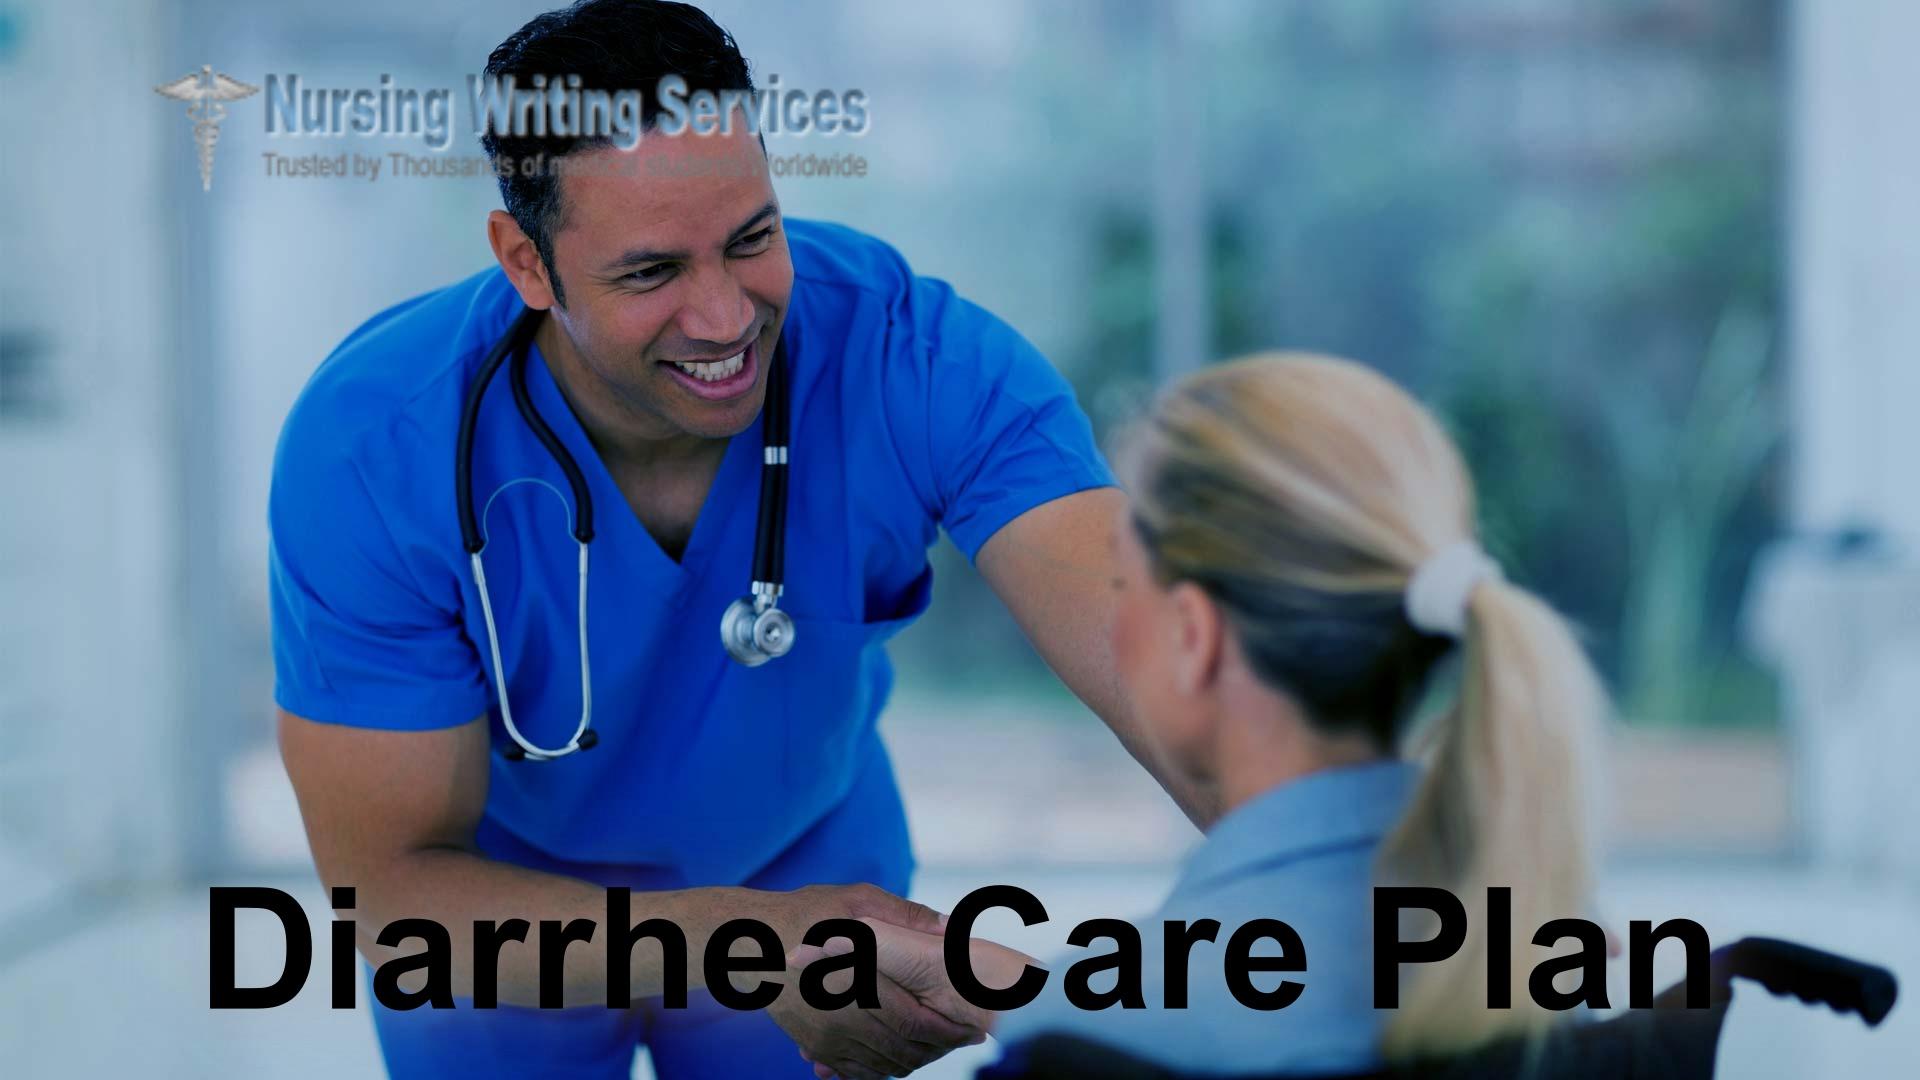 Diarrhea Care Plan Writing Services